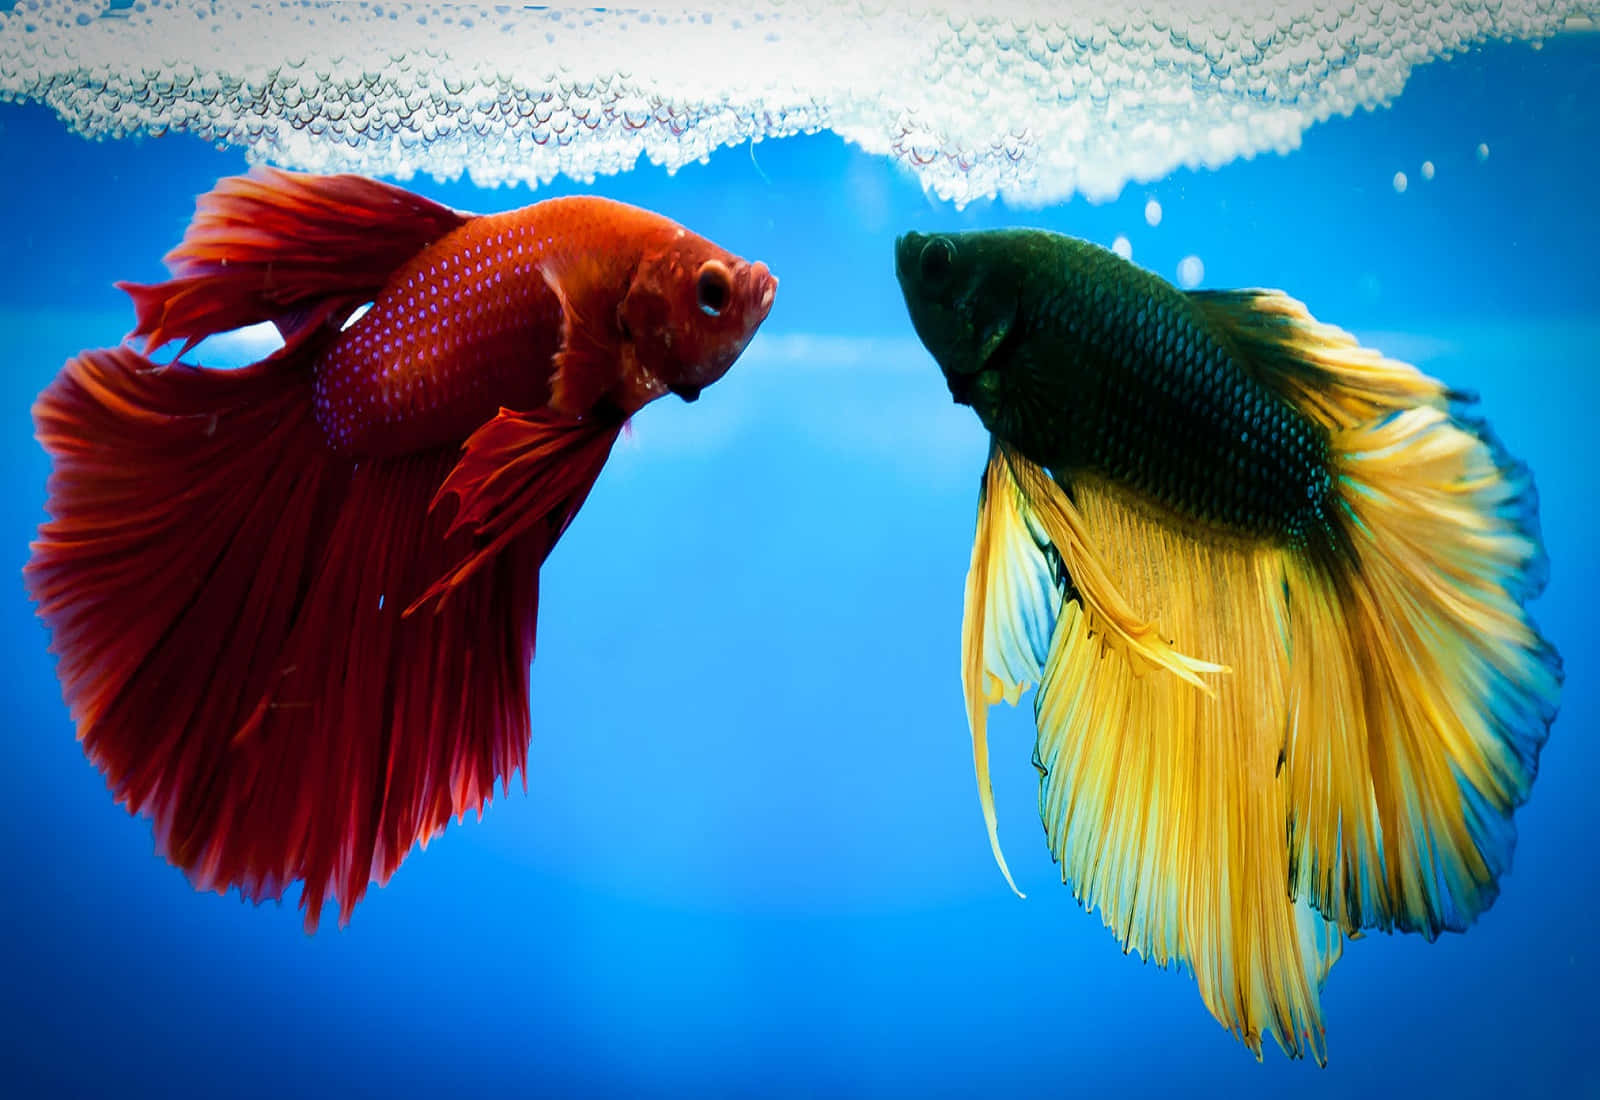 Vibrant Betta Fish Duo.jpg Background